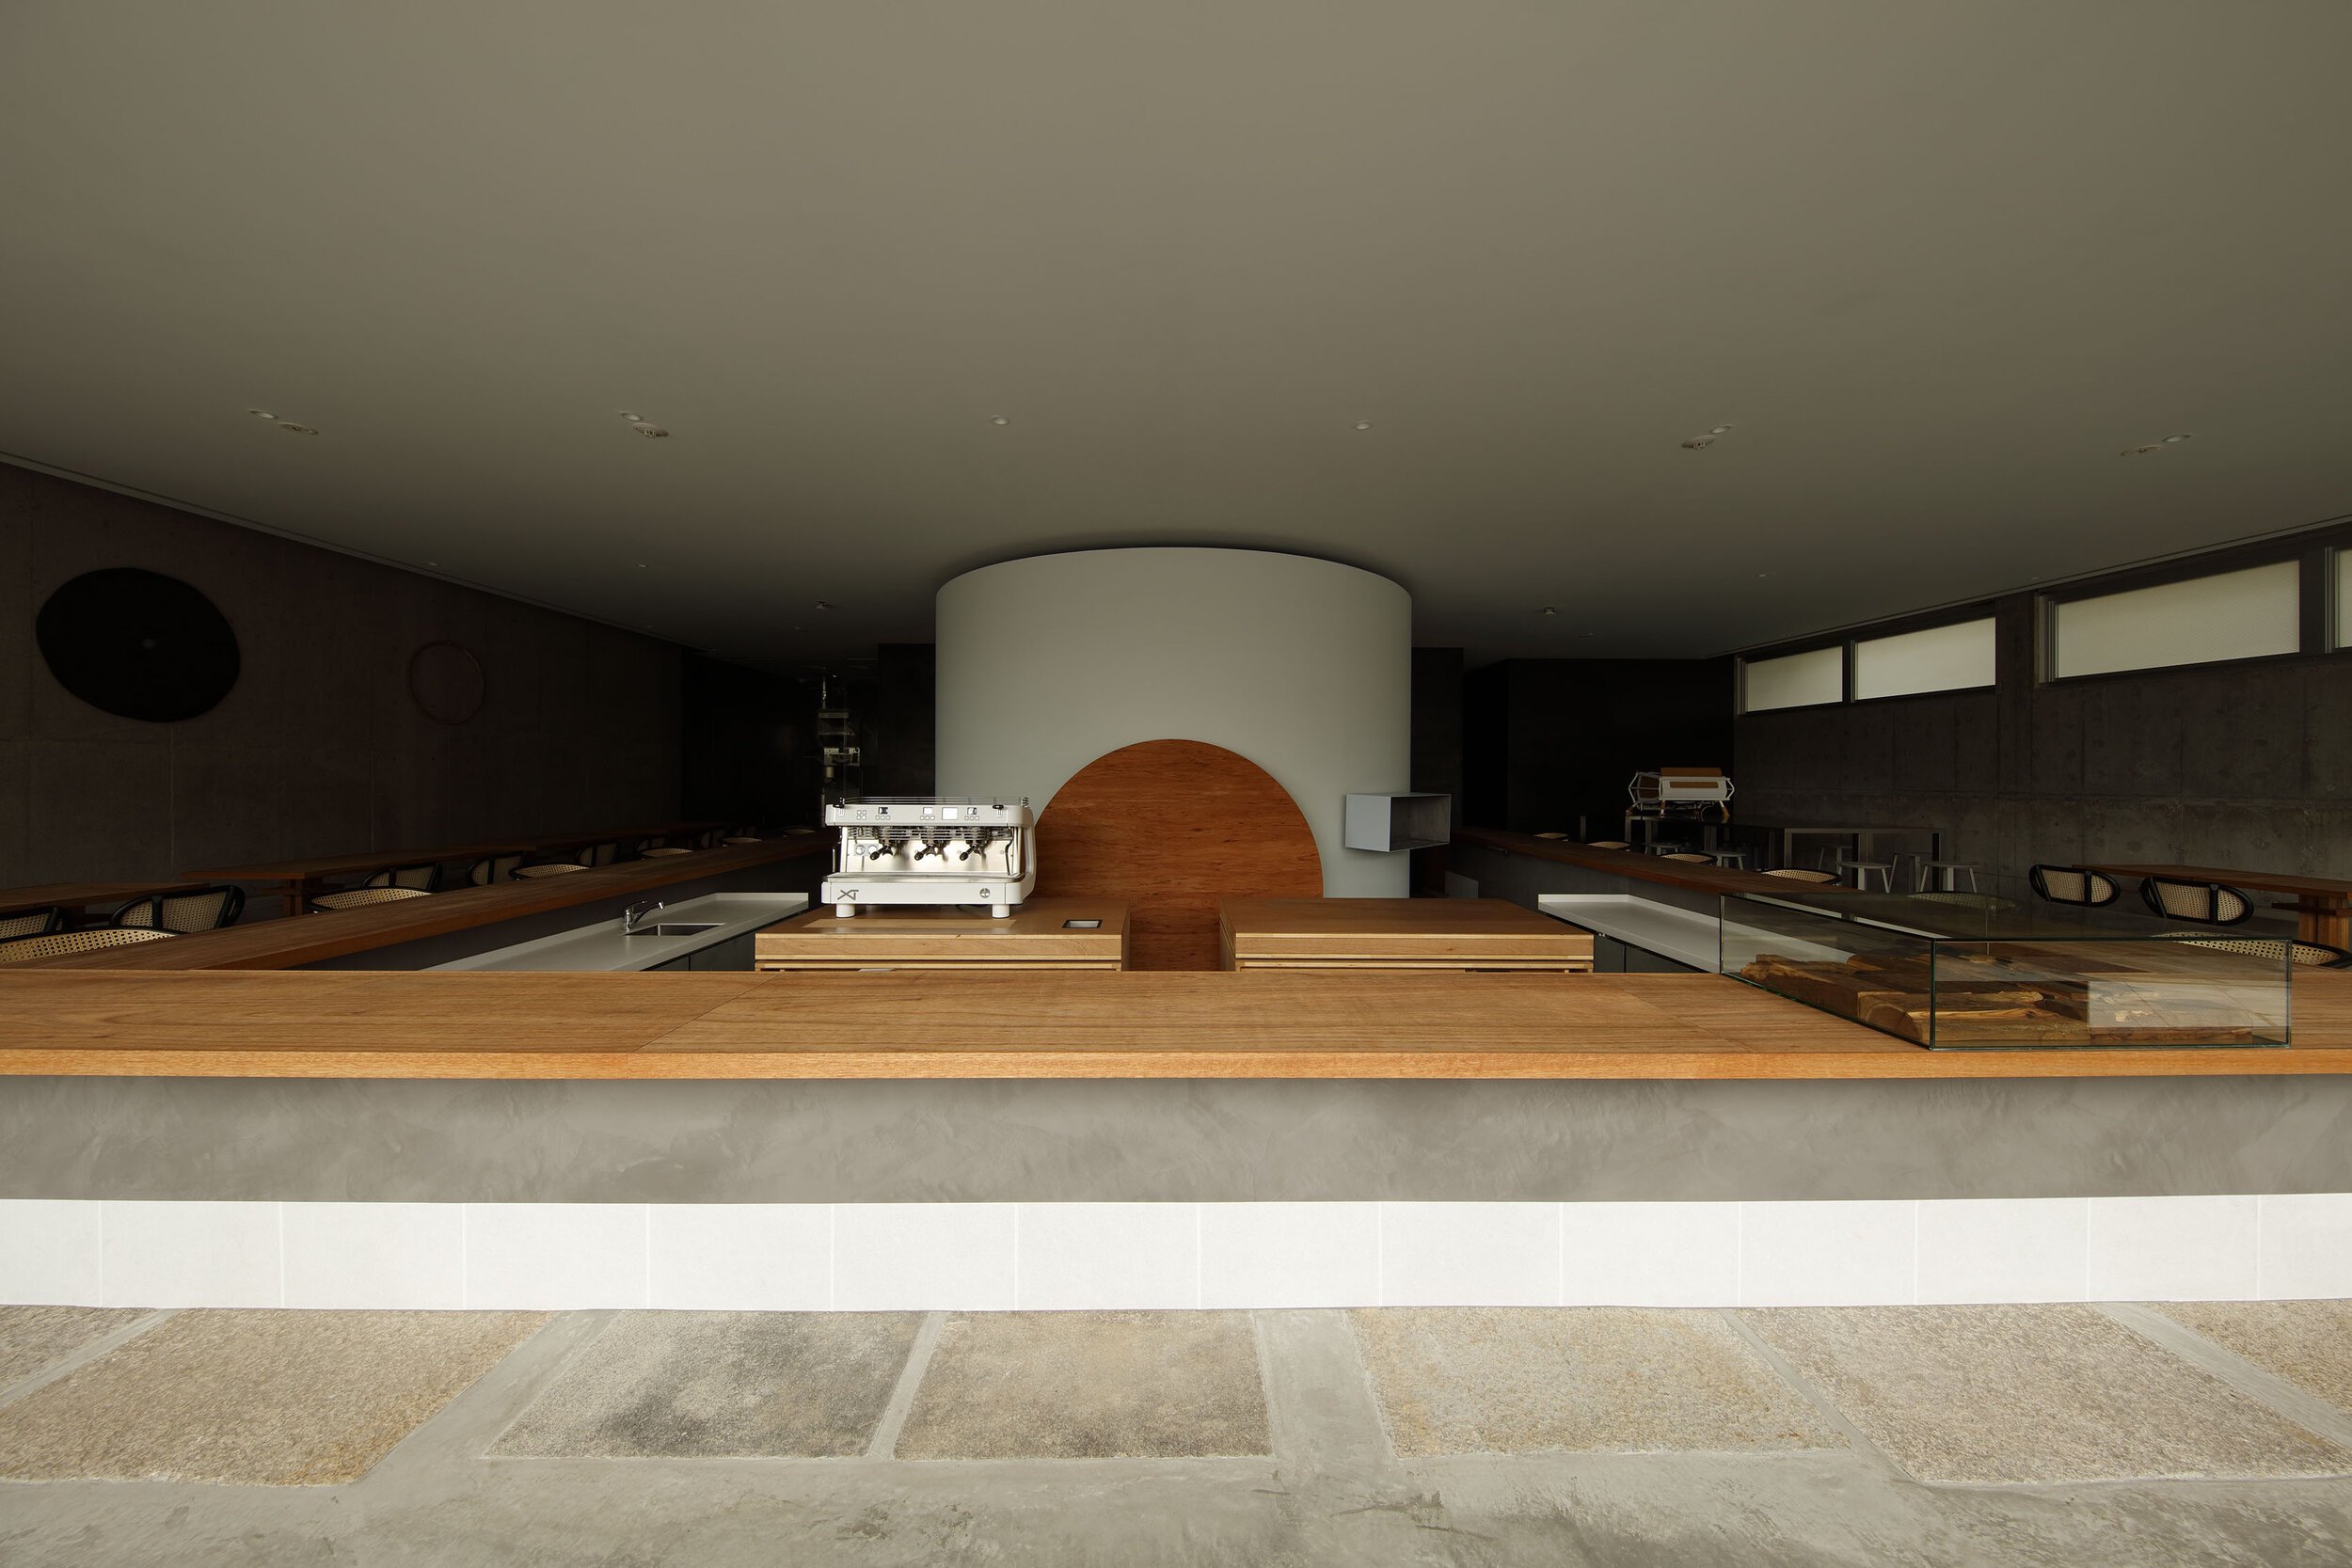  Yusuke Seki Studioの関祐介がデザインしたカフェOgawa Coffee Laboratoryのインテリア 